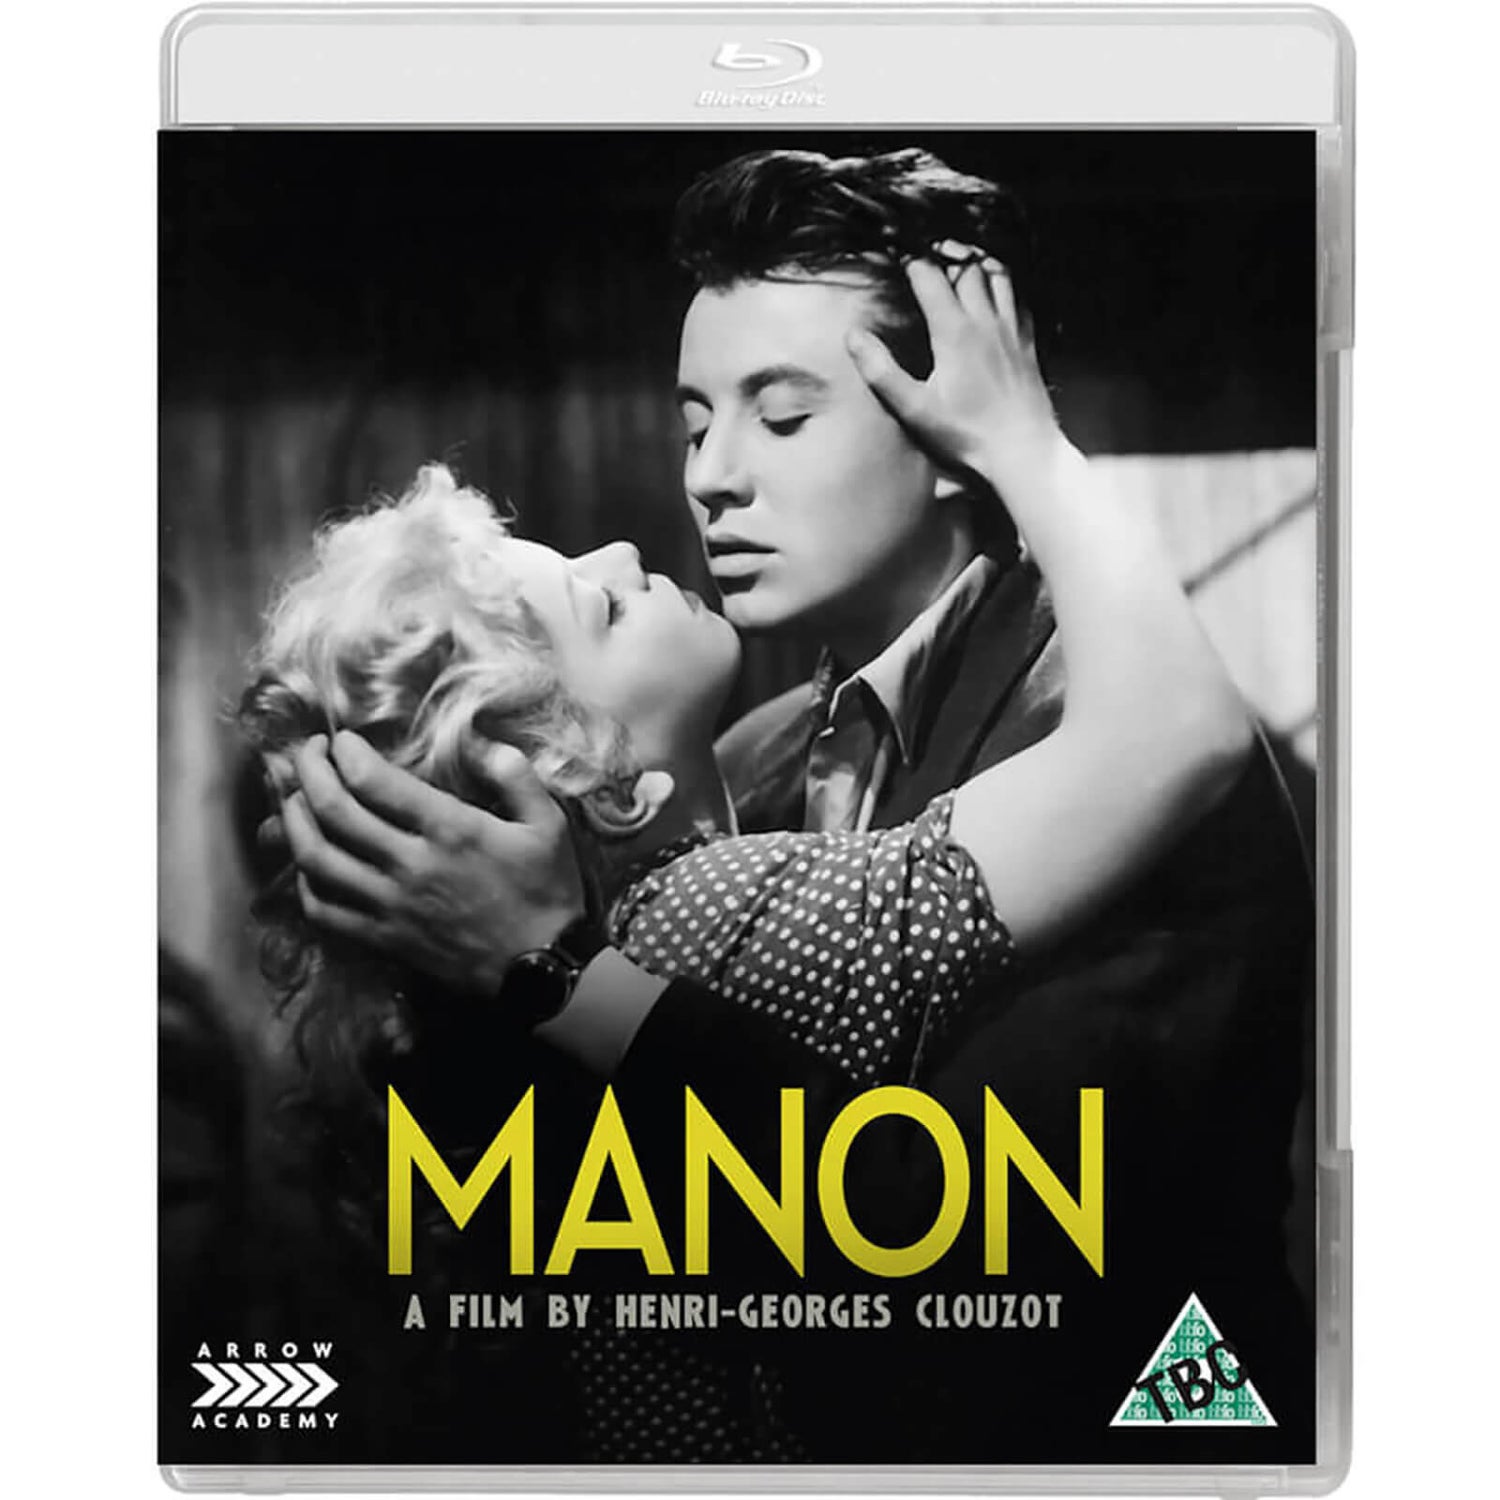 Manon Blu-ray